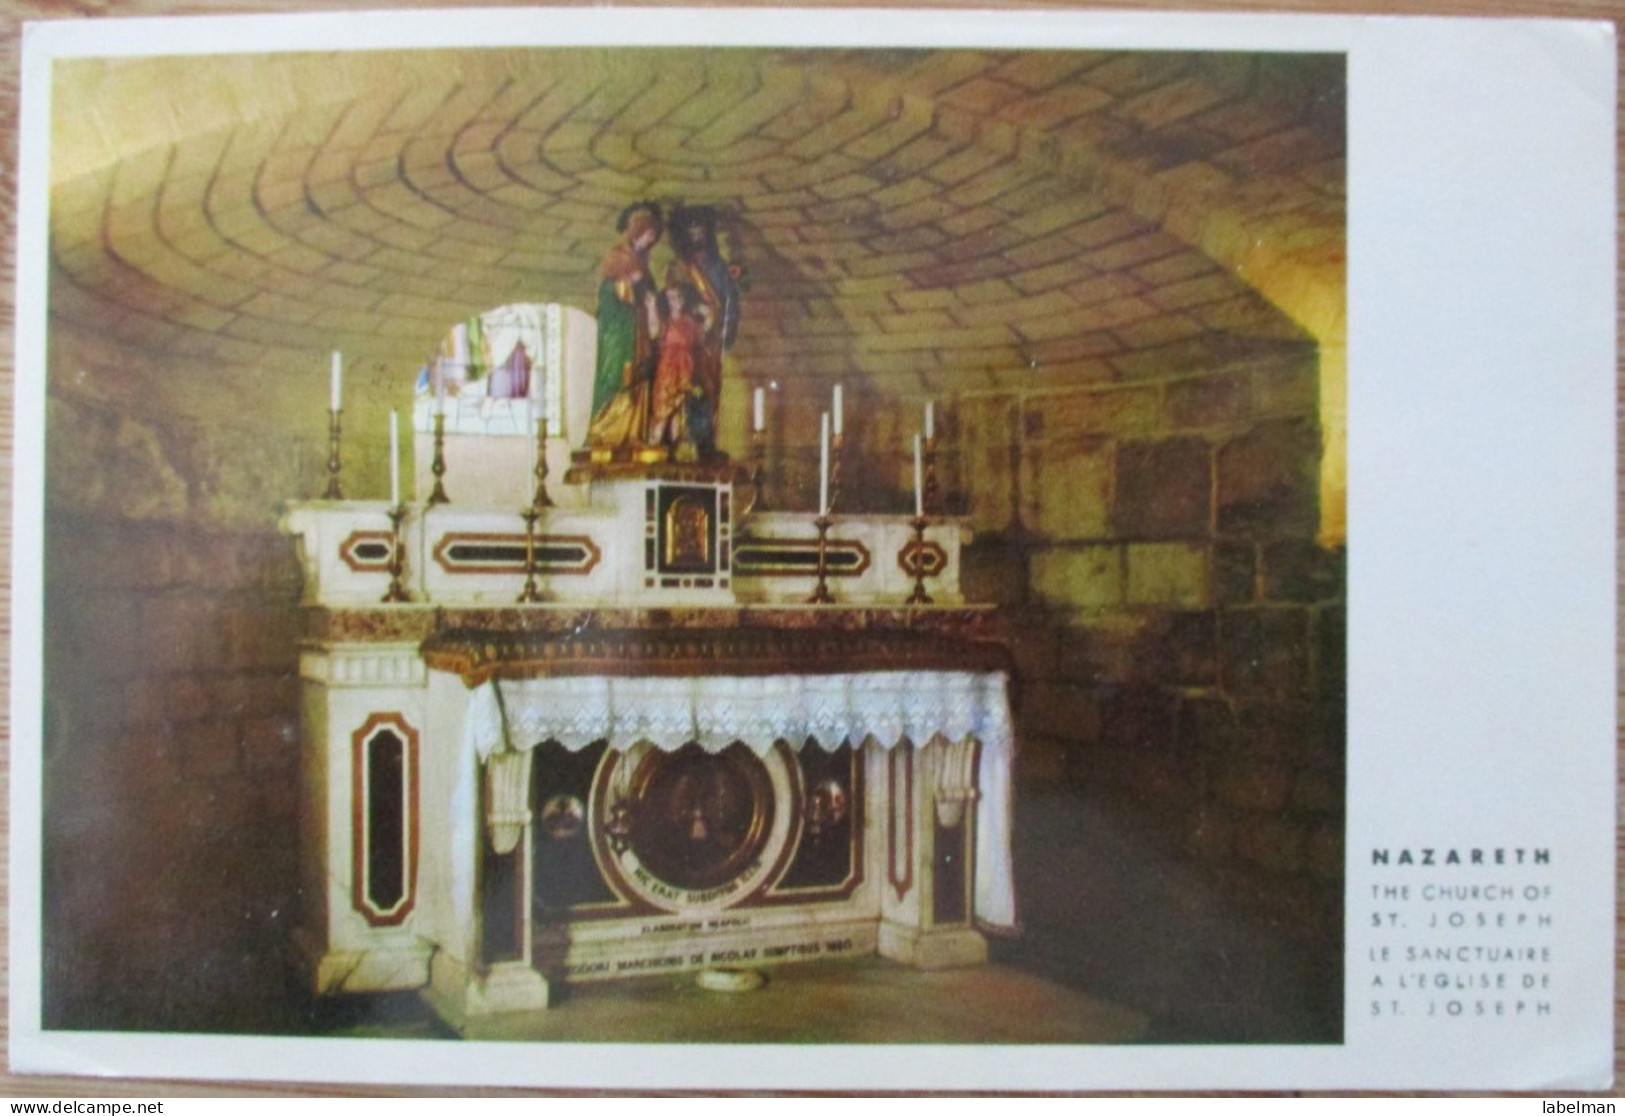 ISRAEL NAZARETH PAUL VI CHURCH JESUS ADOLECENT POSTCARD CARTOLINA ANSICHTSKARTE POSTKARTE KARTE CARD PC CARTE POSTALE - Israel